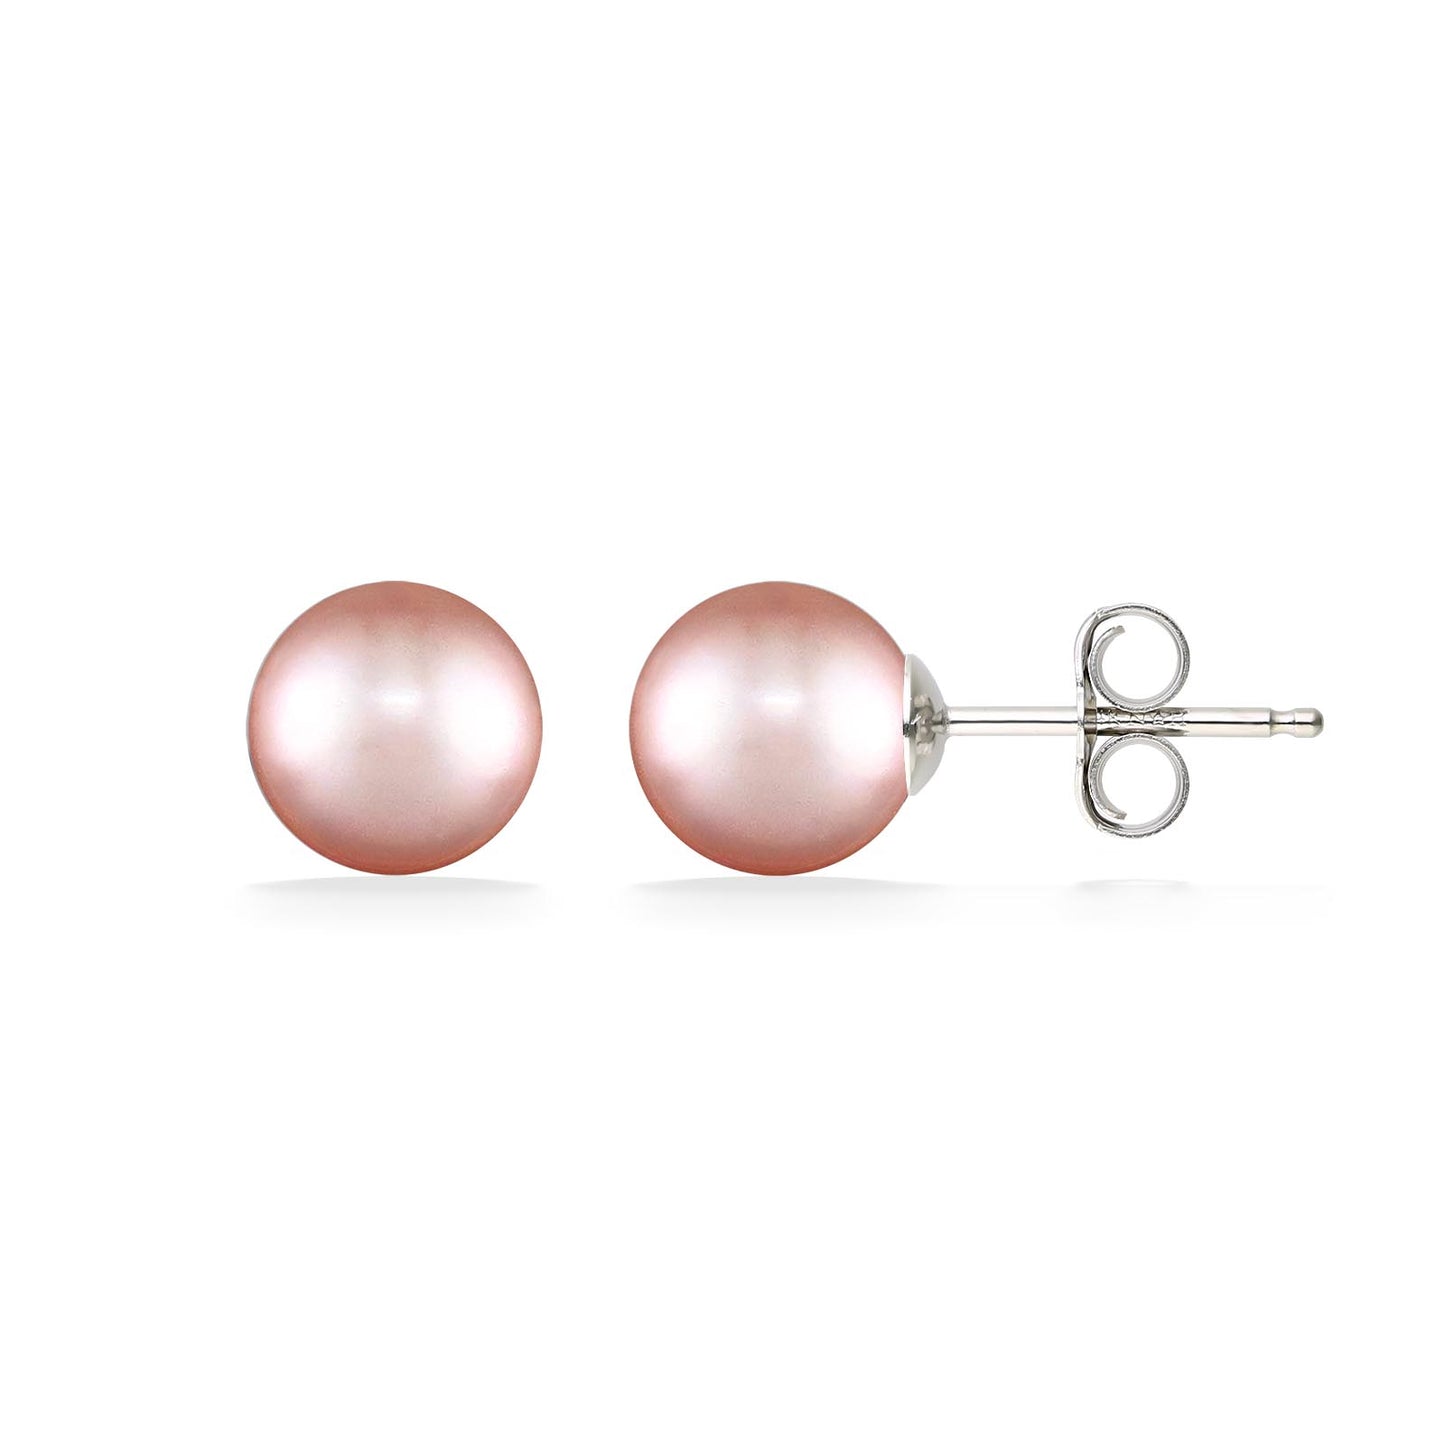 41325 - 14K White Gold - Pink Freshwater Pearl Stud Earrings